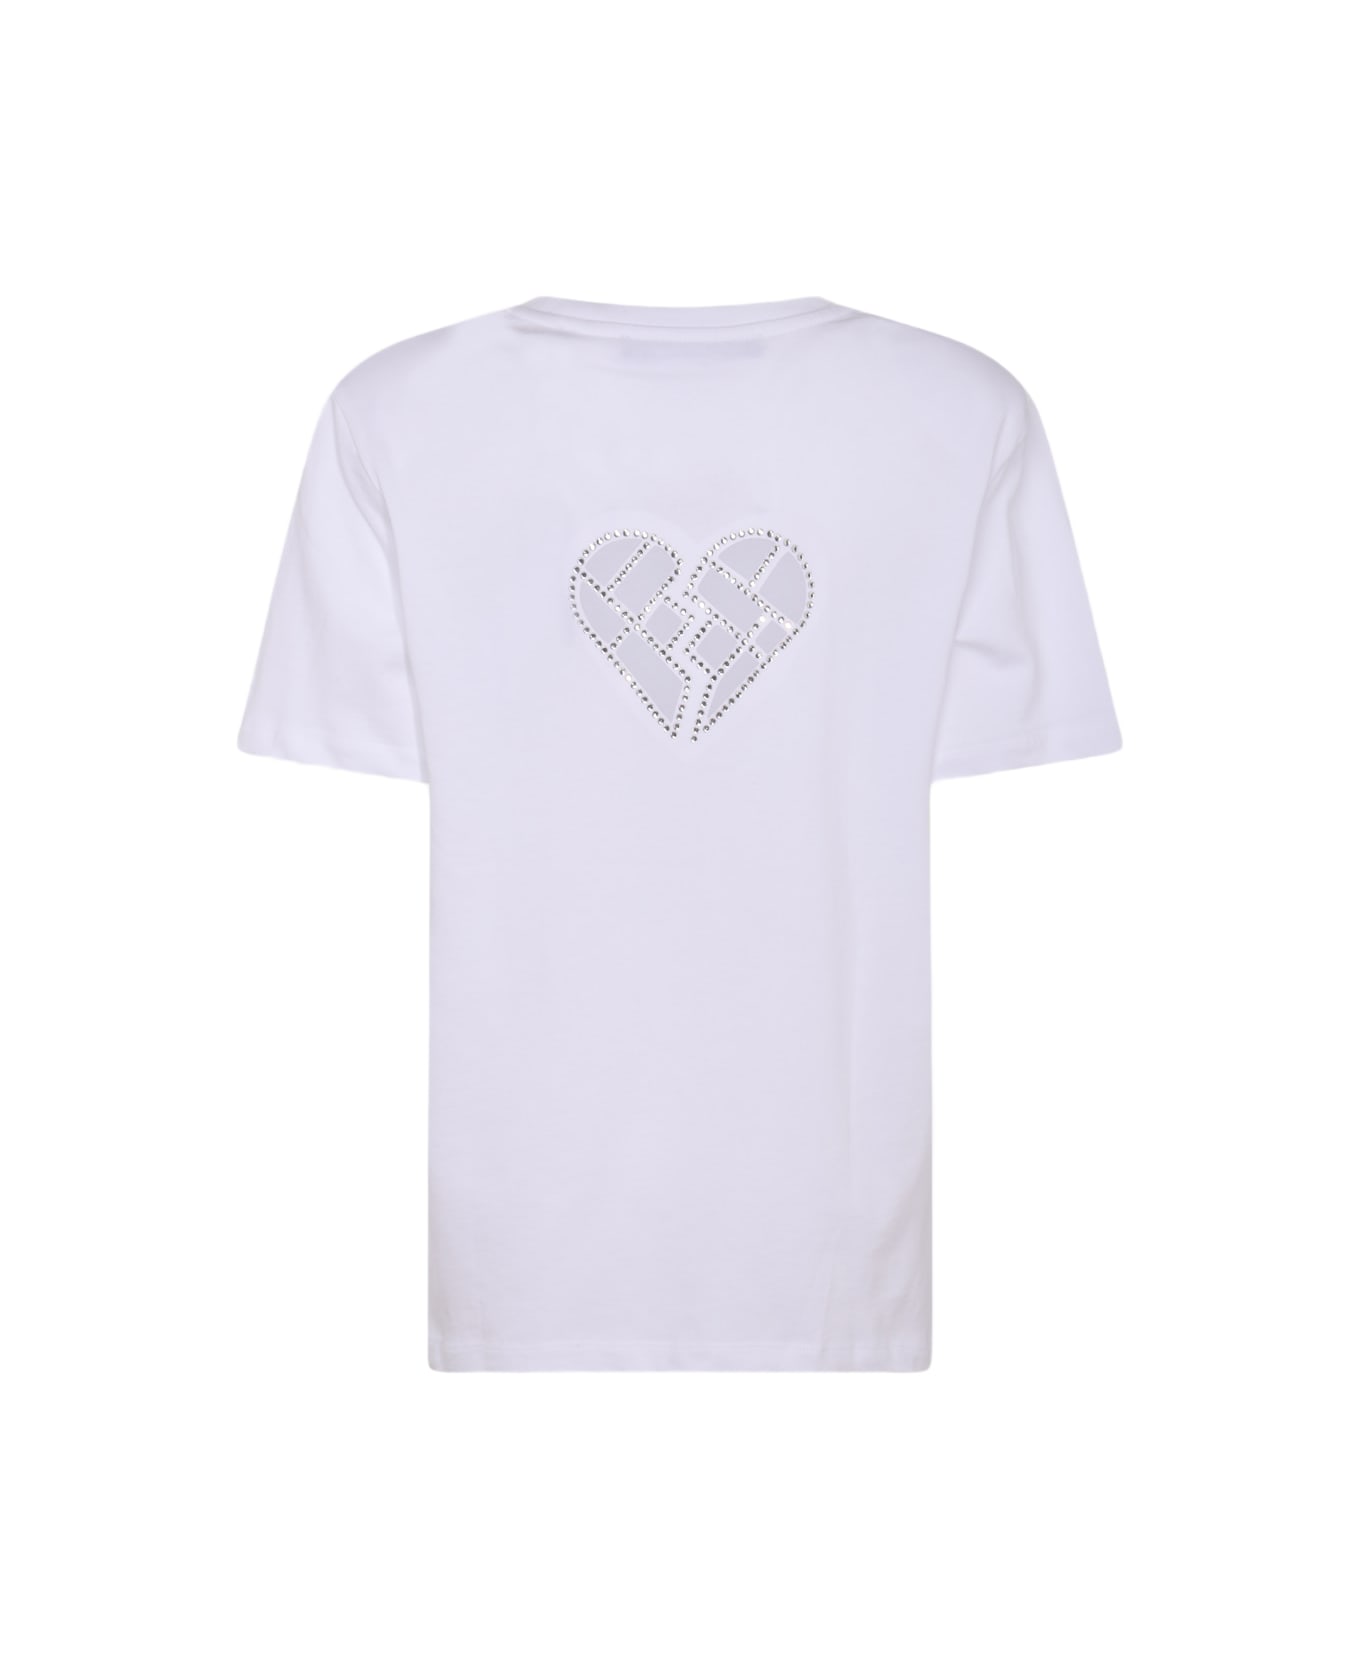 Rotate by Birger Christensen White Cotton T-shirt - White Tシャツ